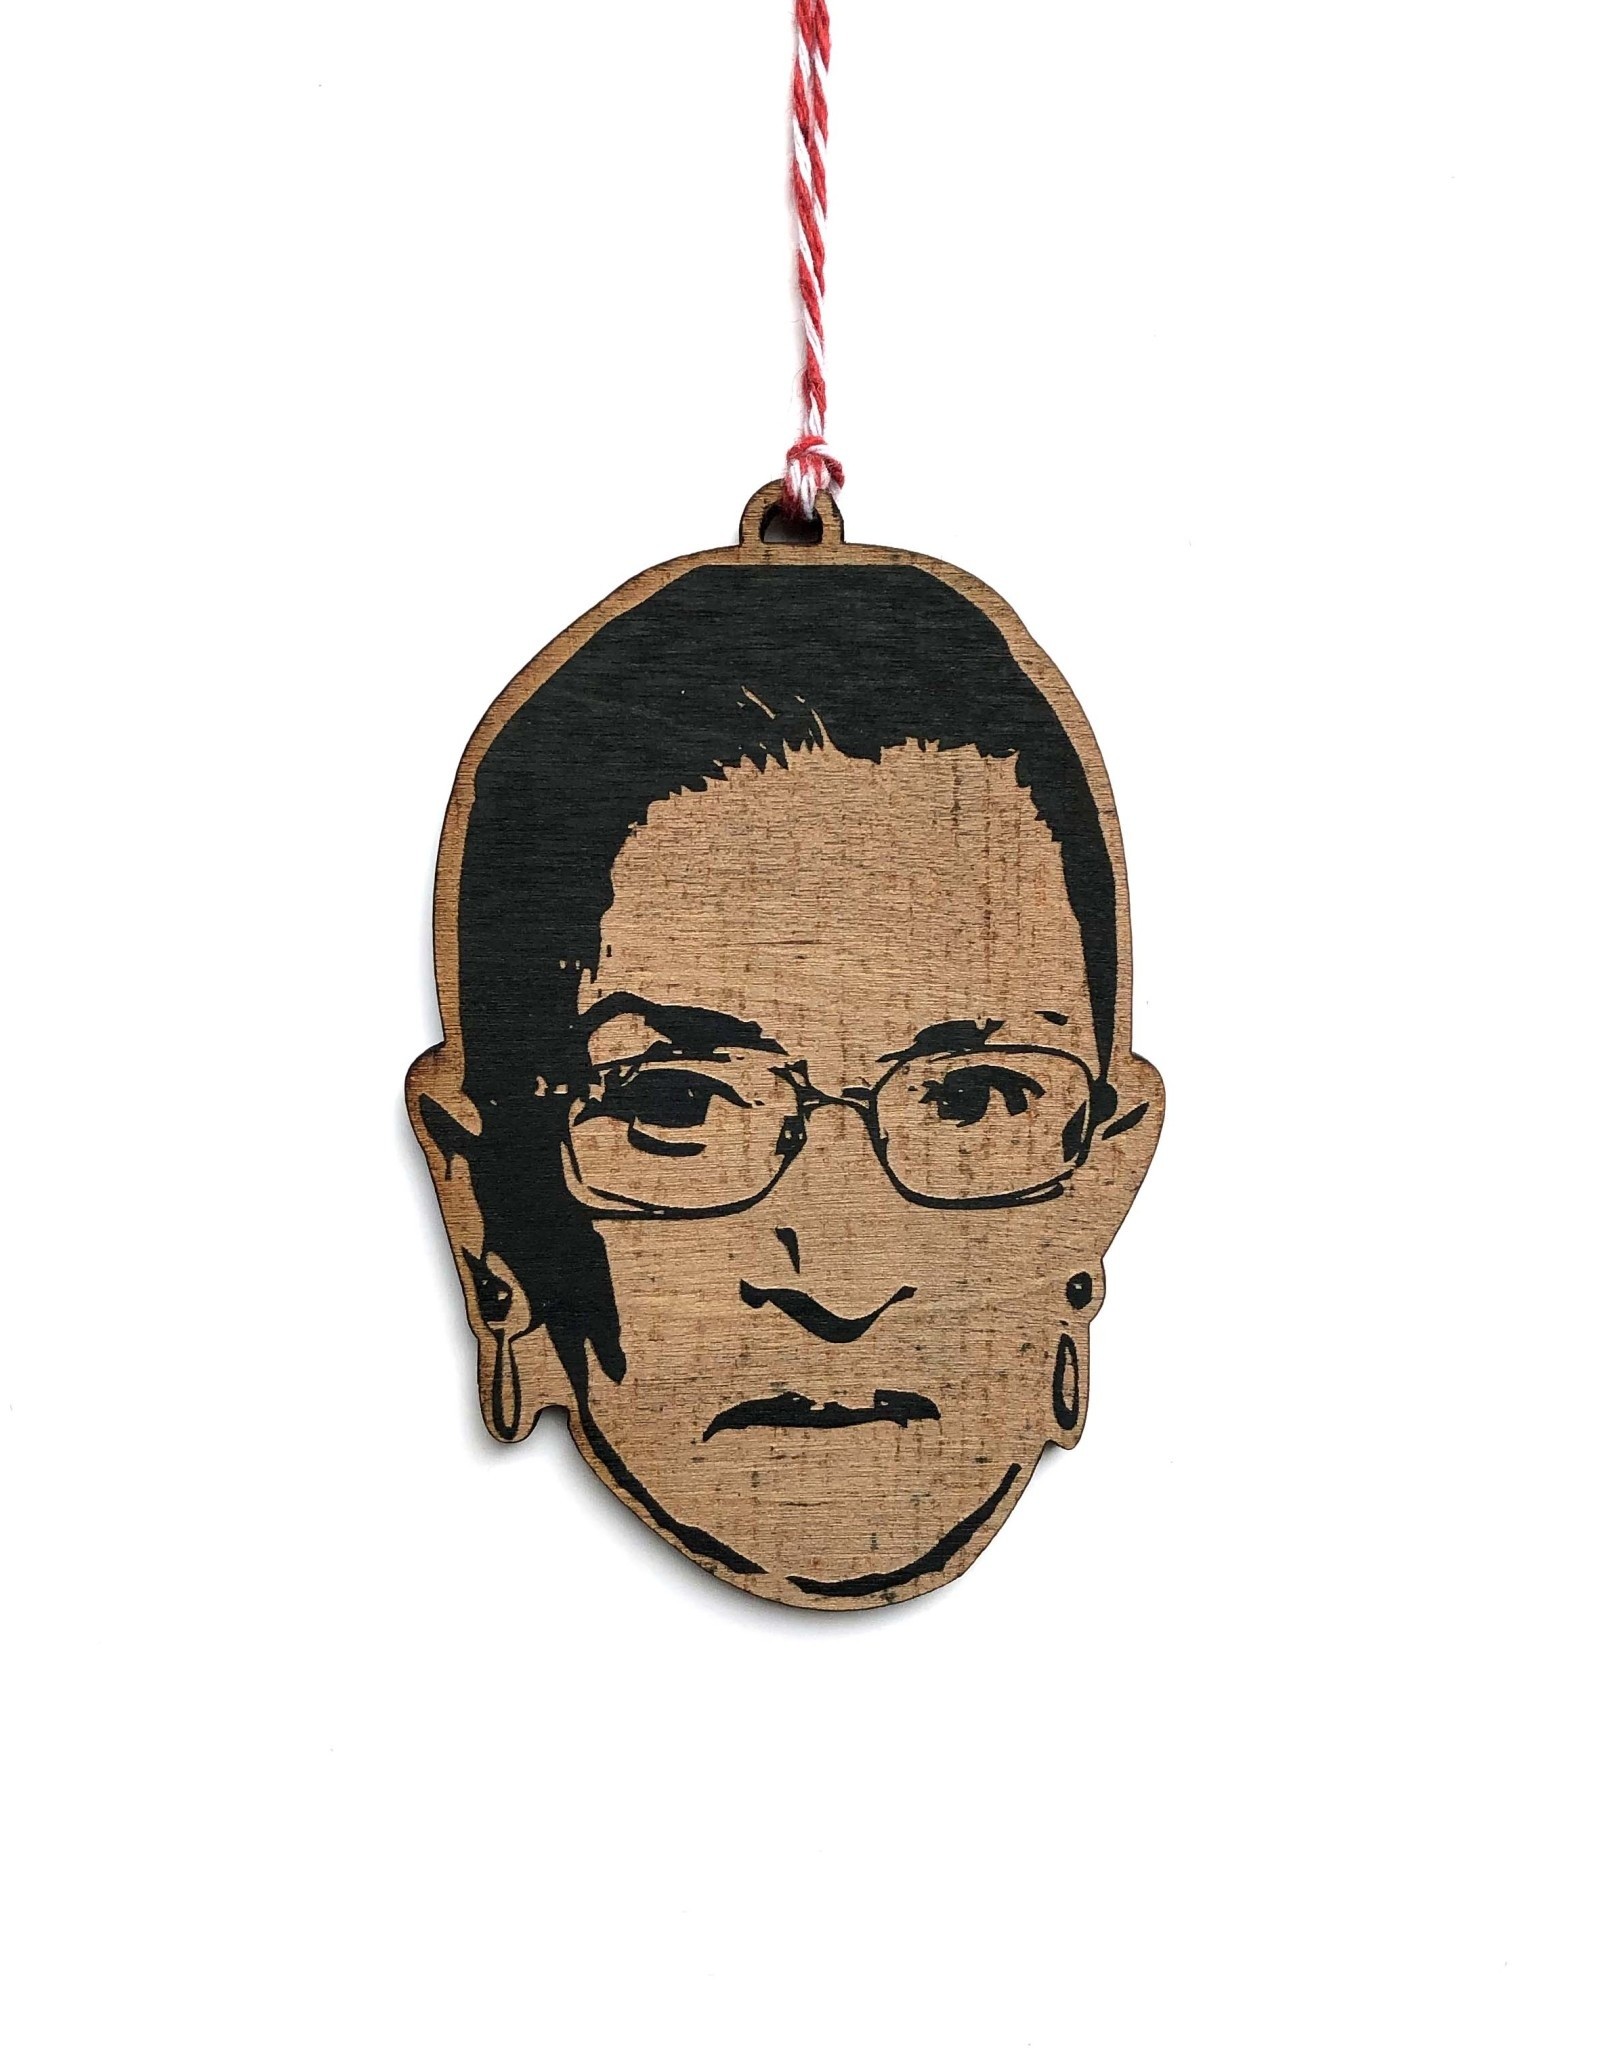 Ruth Bader Ginsburg RBG Wooden Ornament